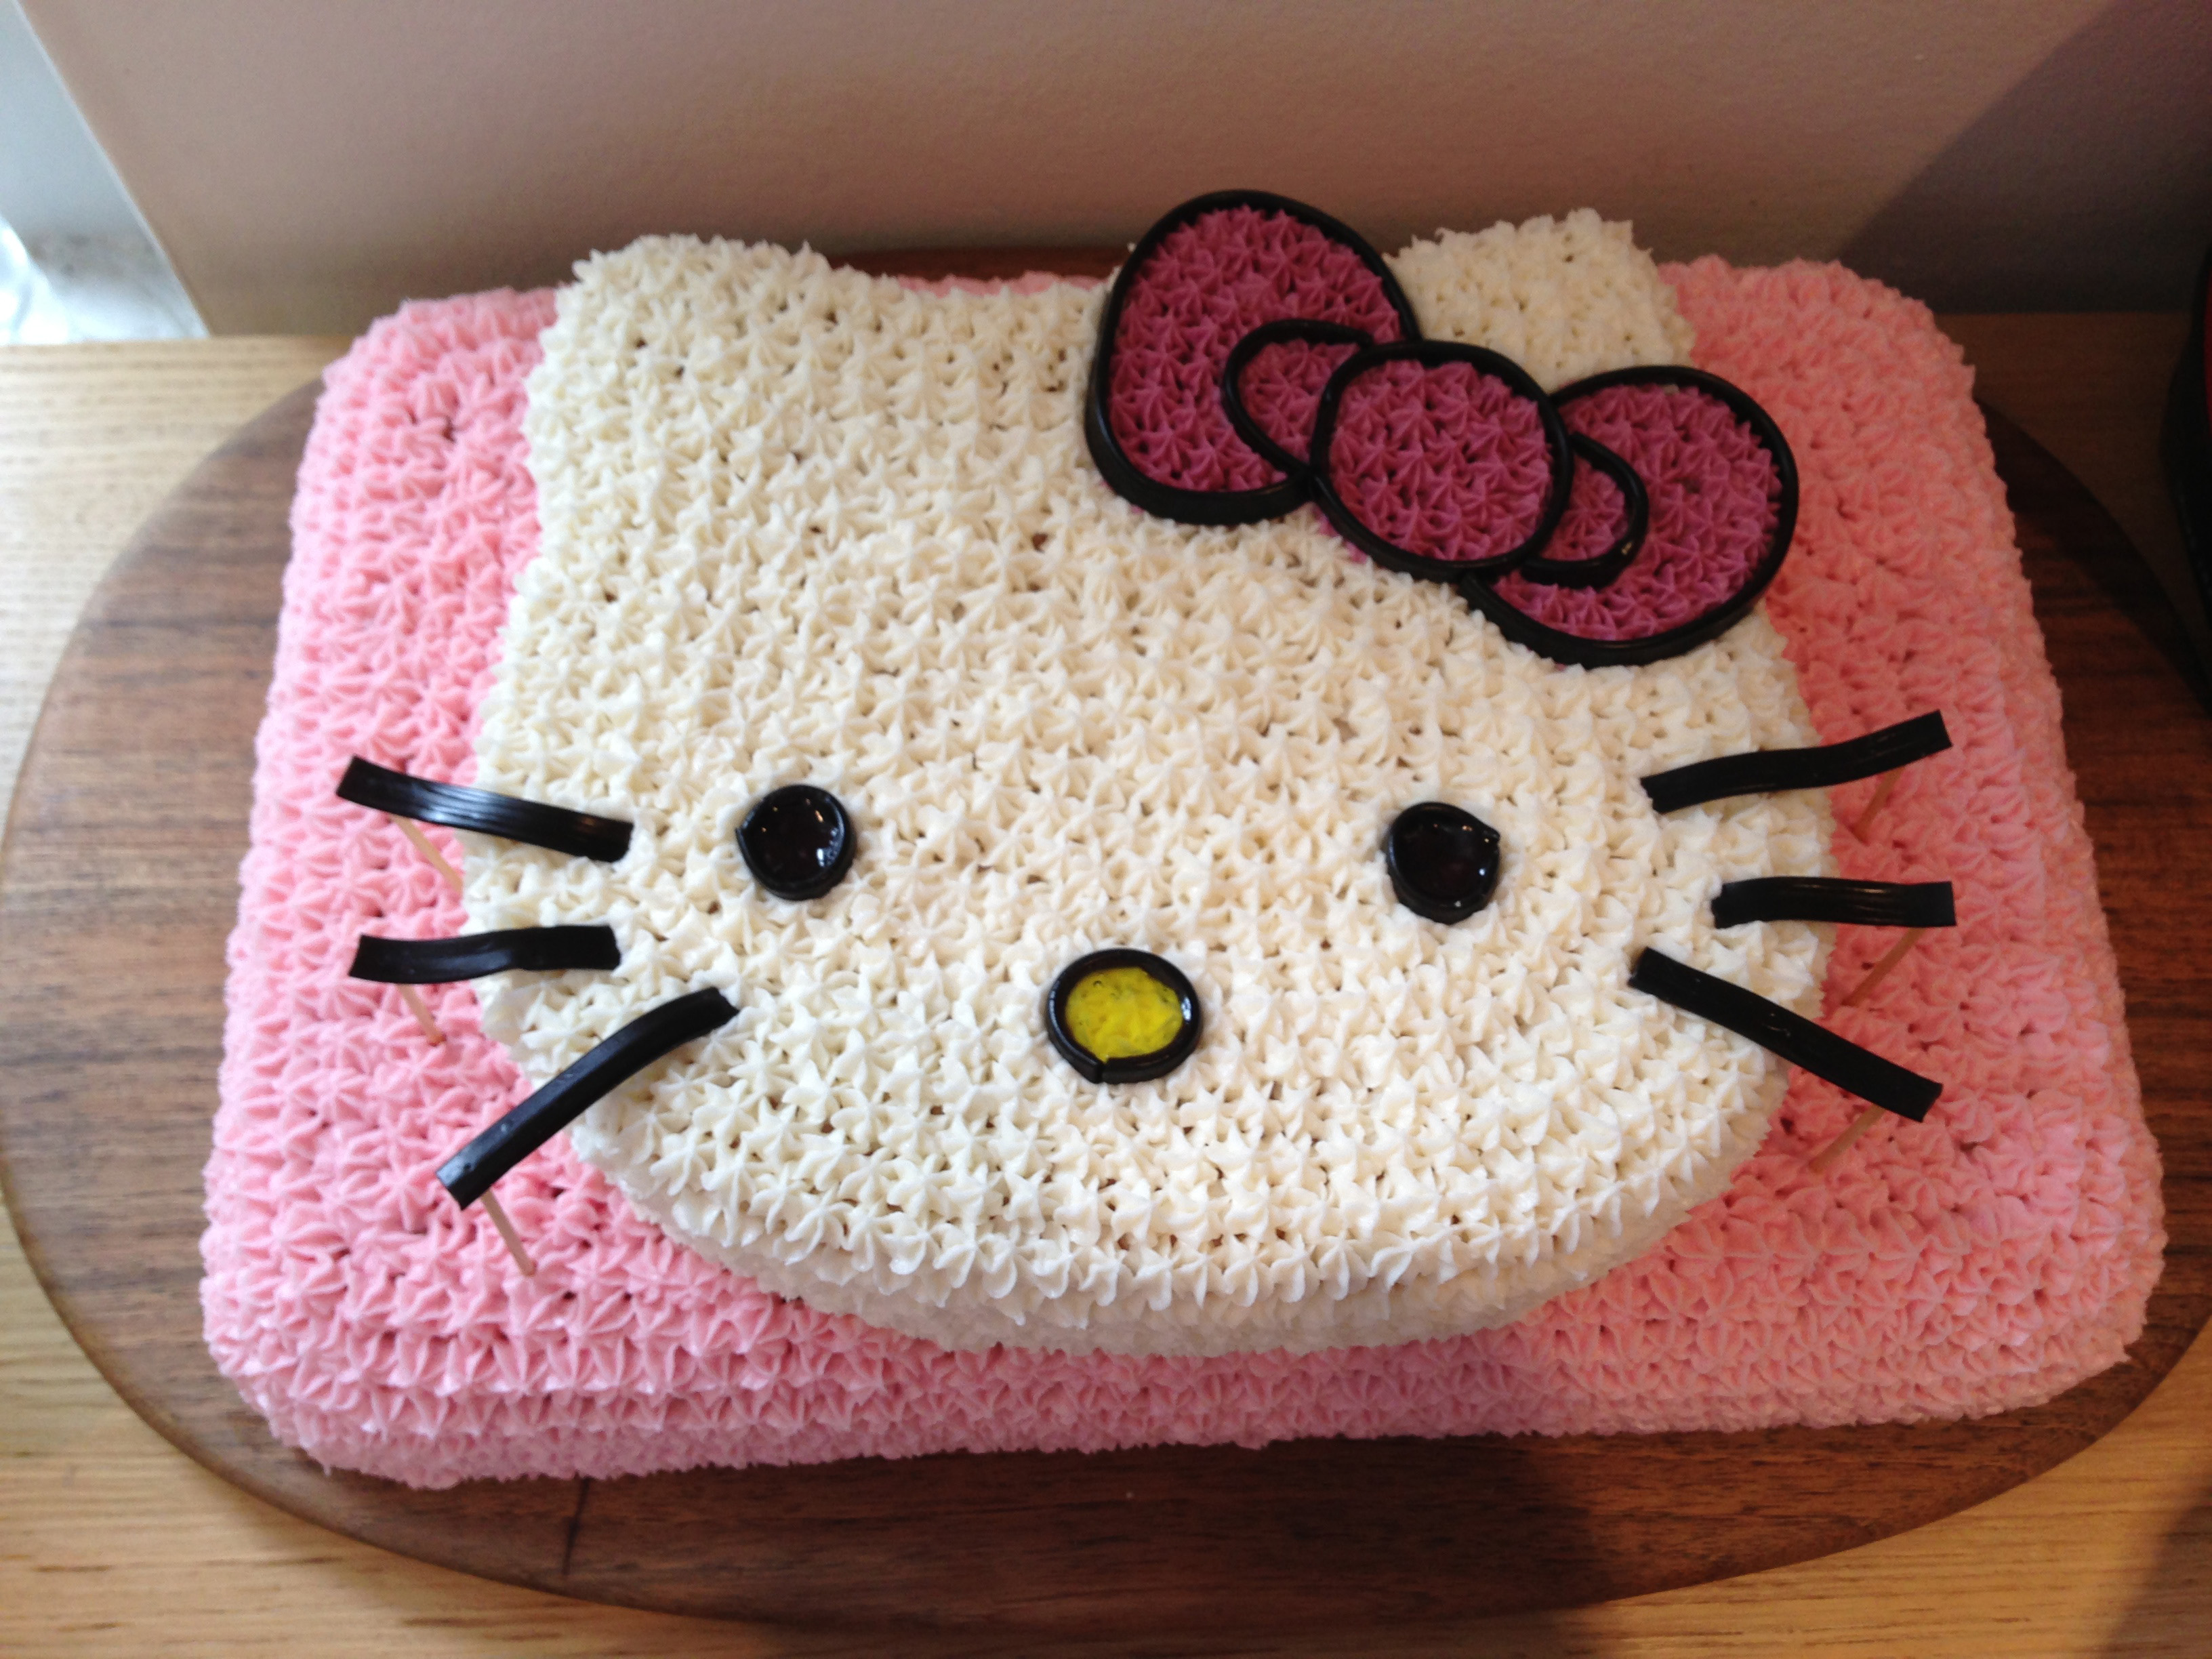 Hello Kitty Birthday Cake - A Charming Treat for Birthday Celebrations –  Kindori Moments Sdn Bhd (796564-U)